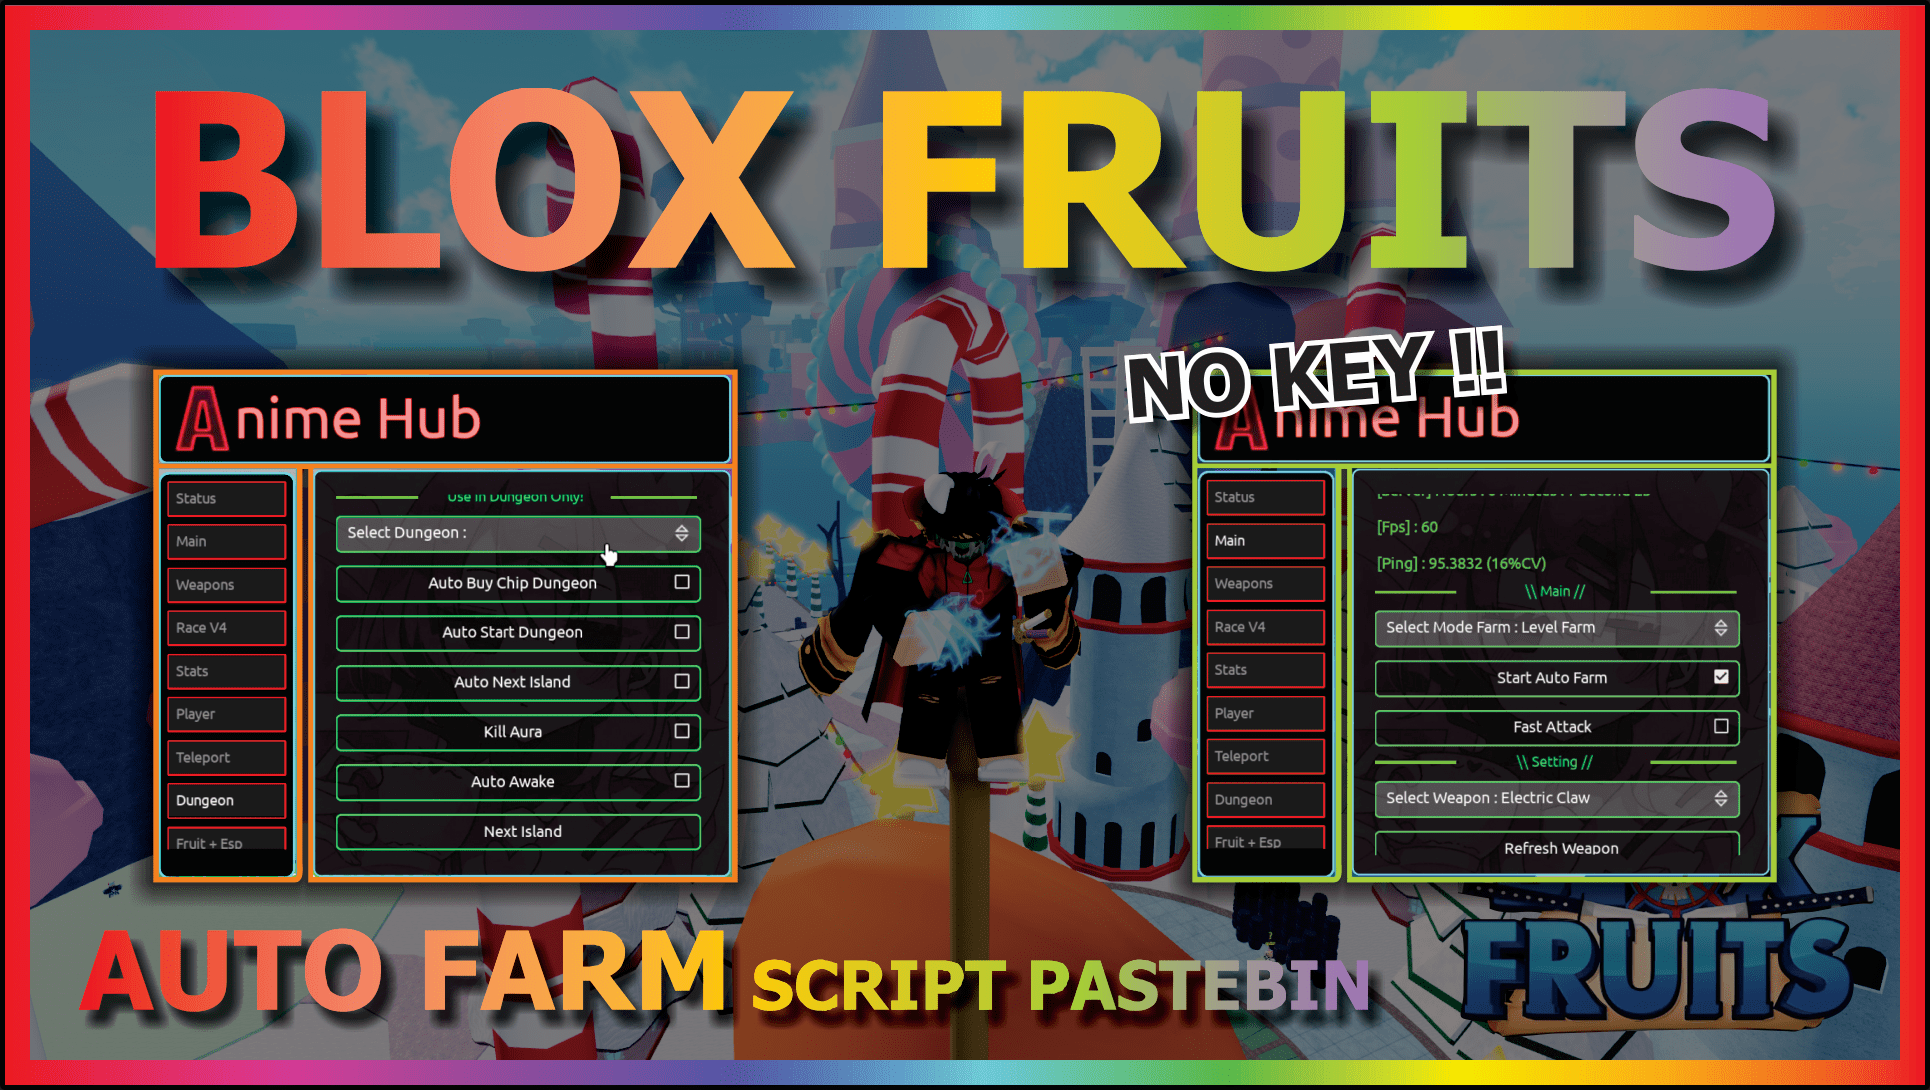 Anime Hub Blox Fruits Script Download Now 100% Free - Krnl